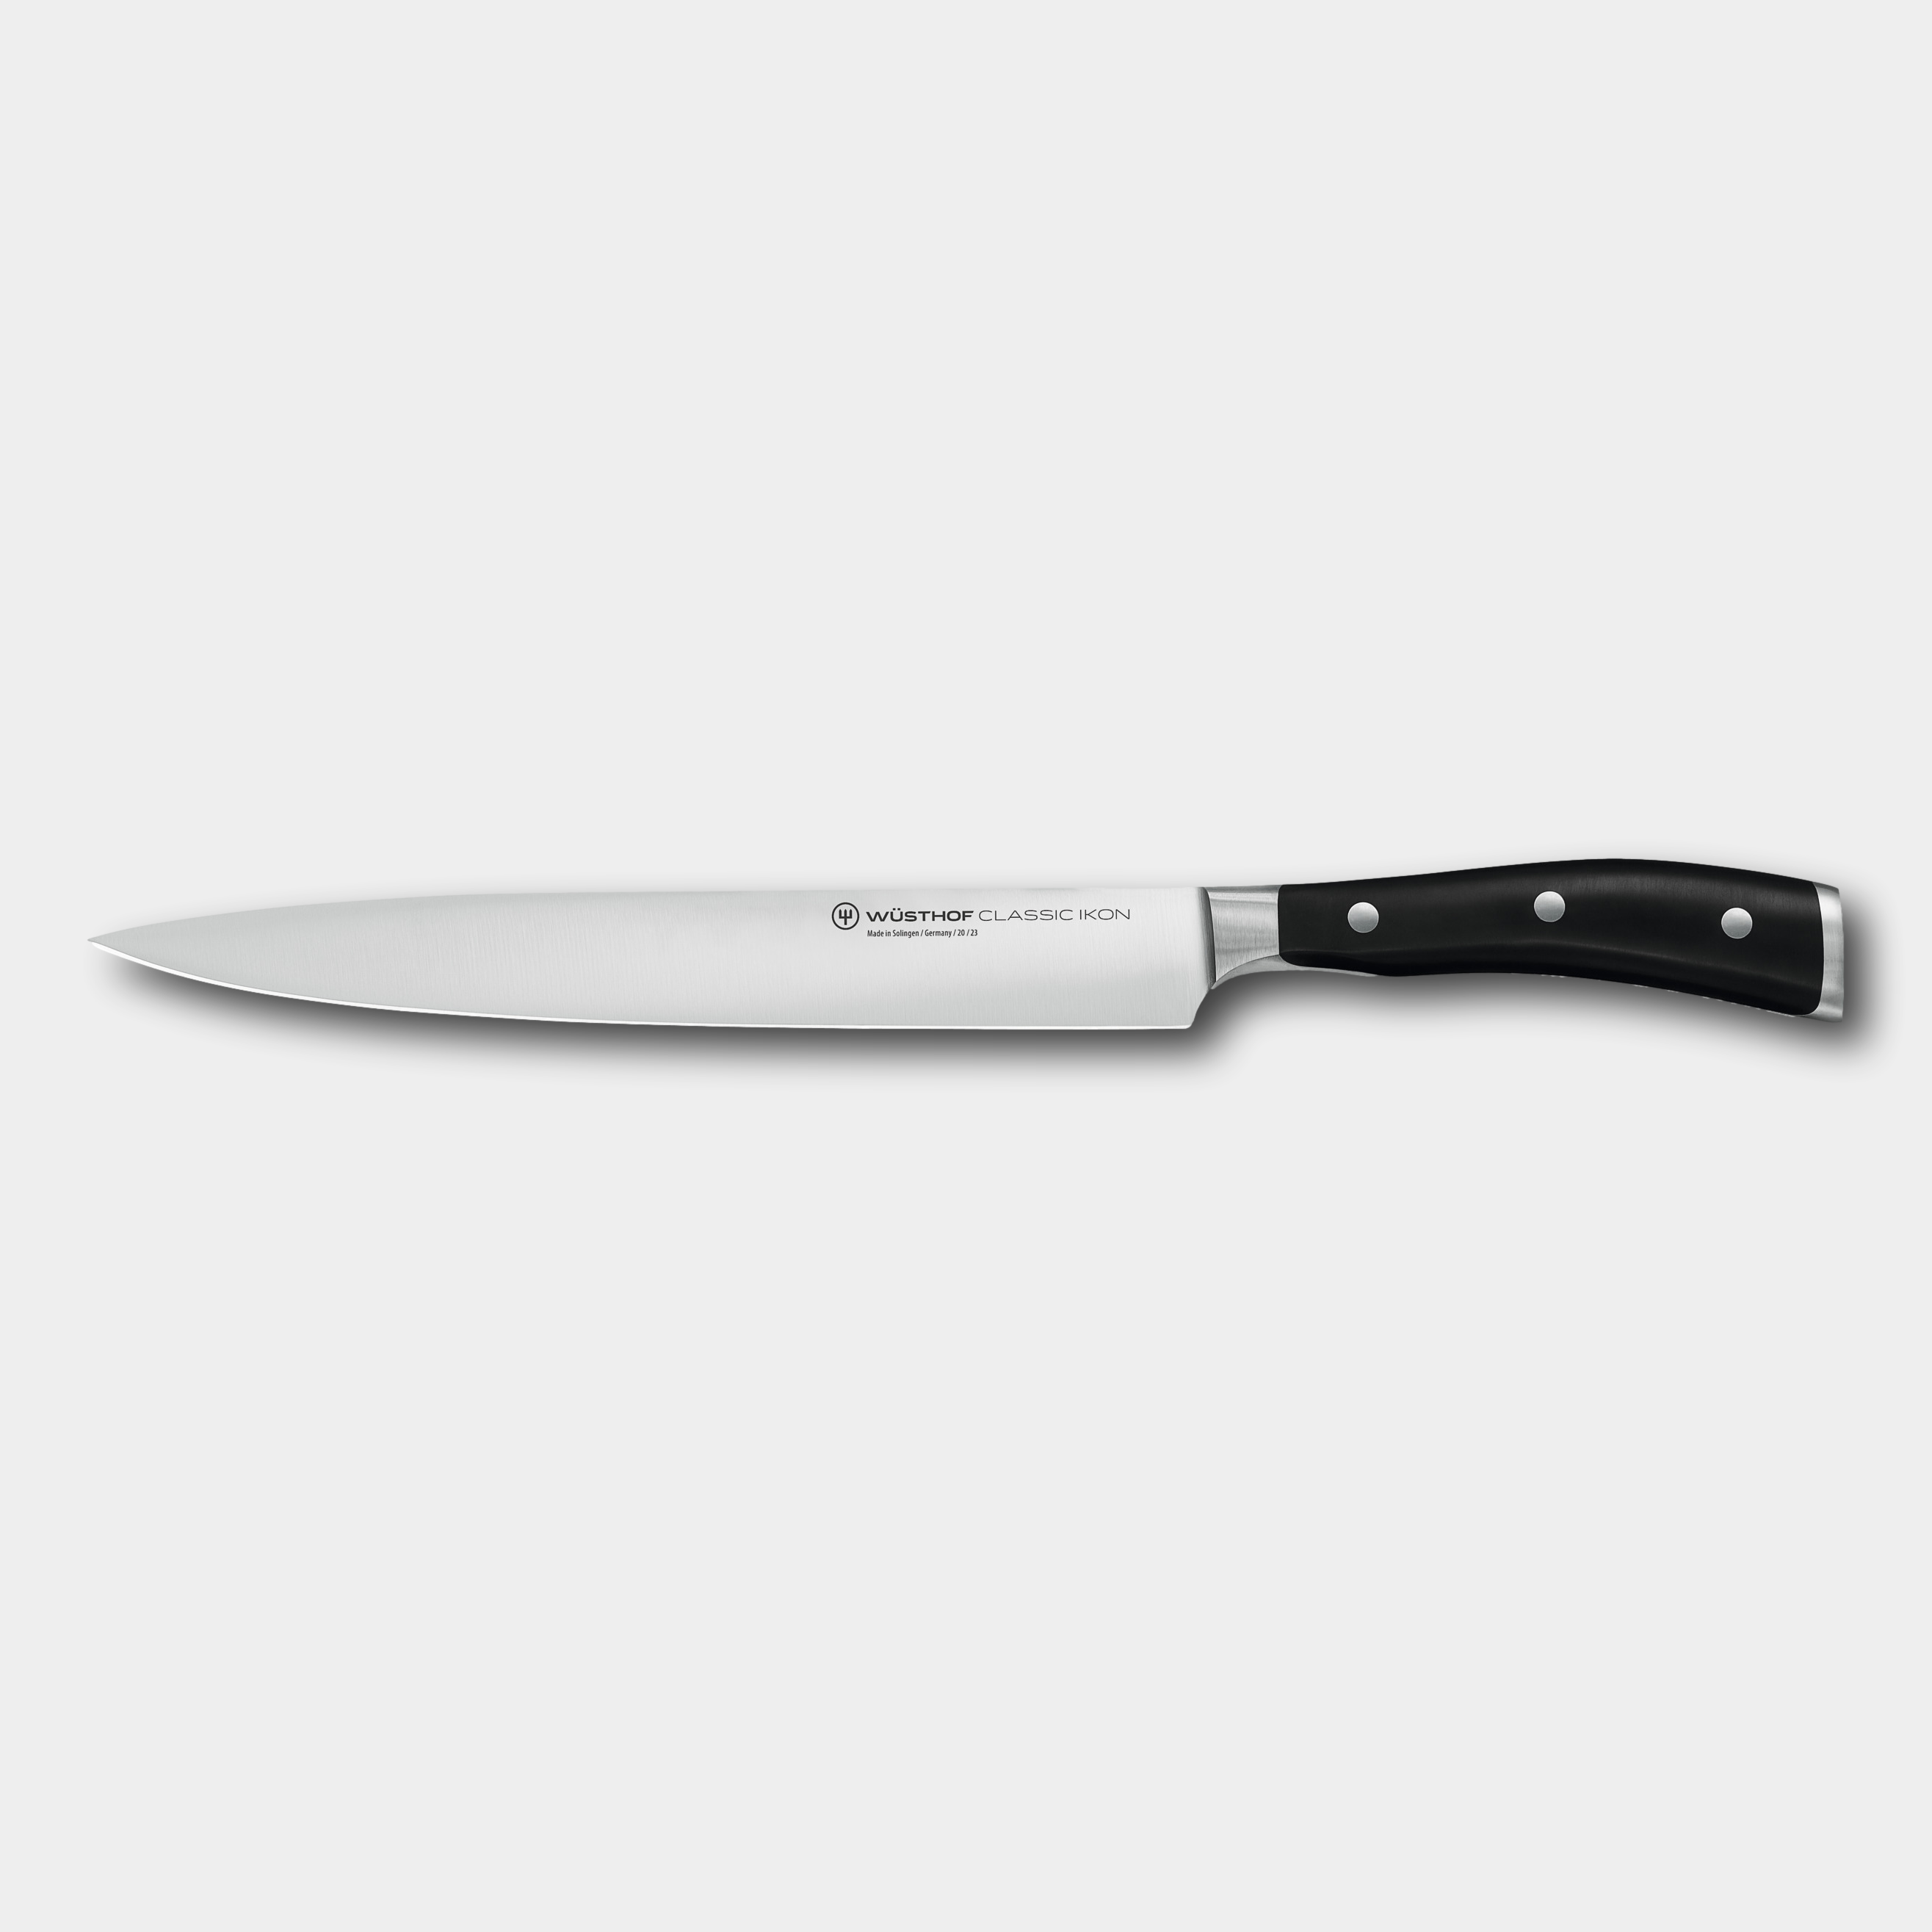 Wusthof Classic IKON 23cm Carving Knife